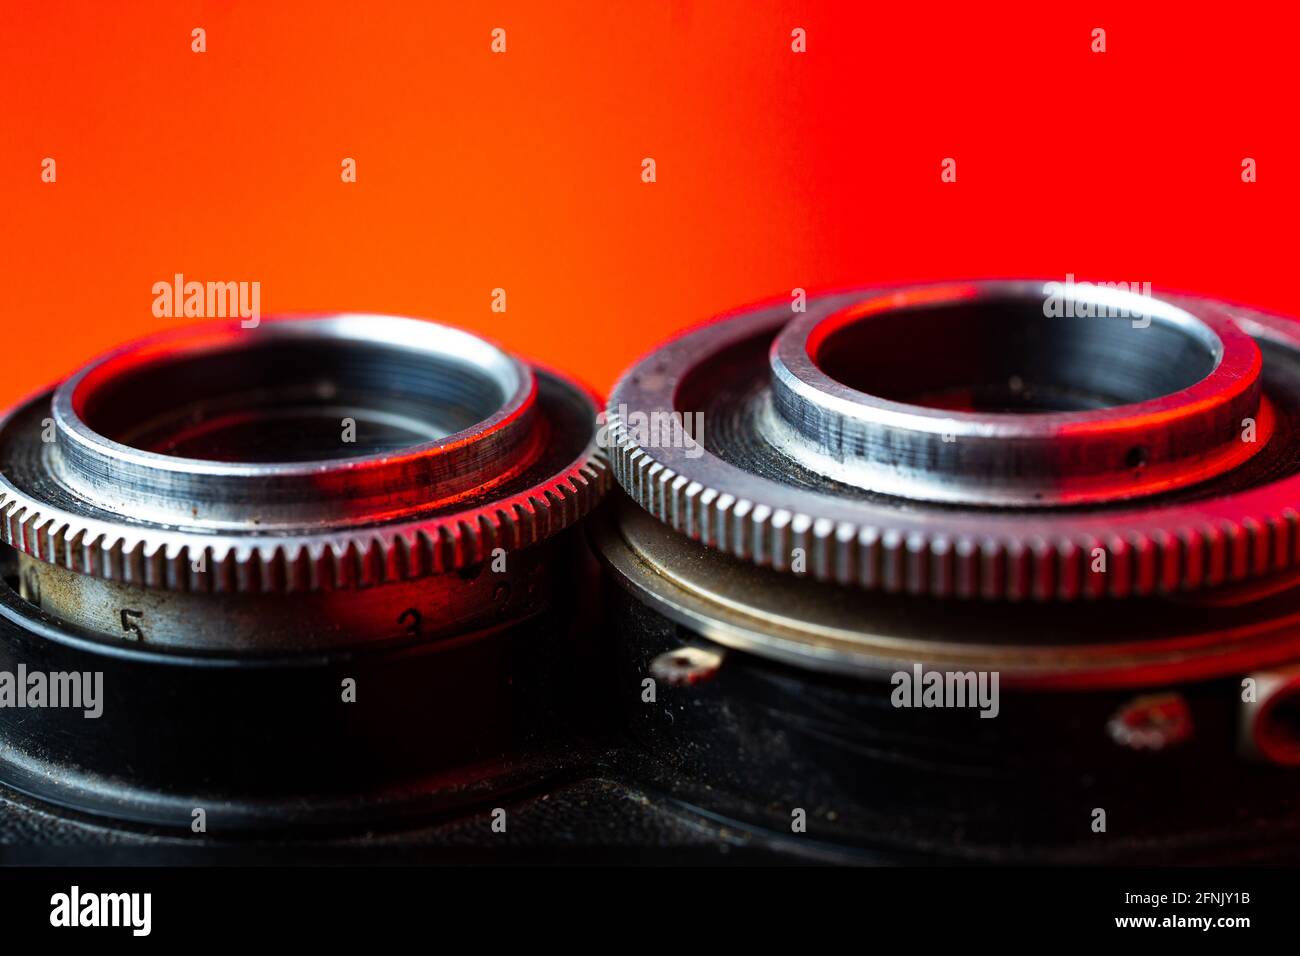 two lenses on the retoro camera close-up Stock Photo